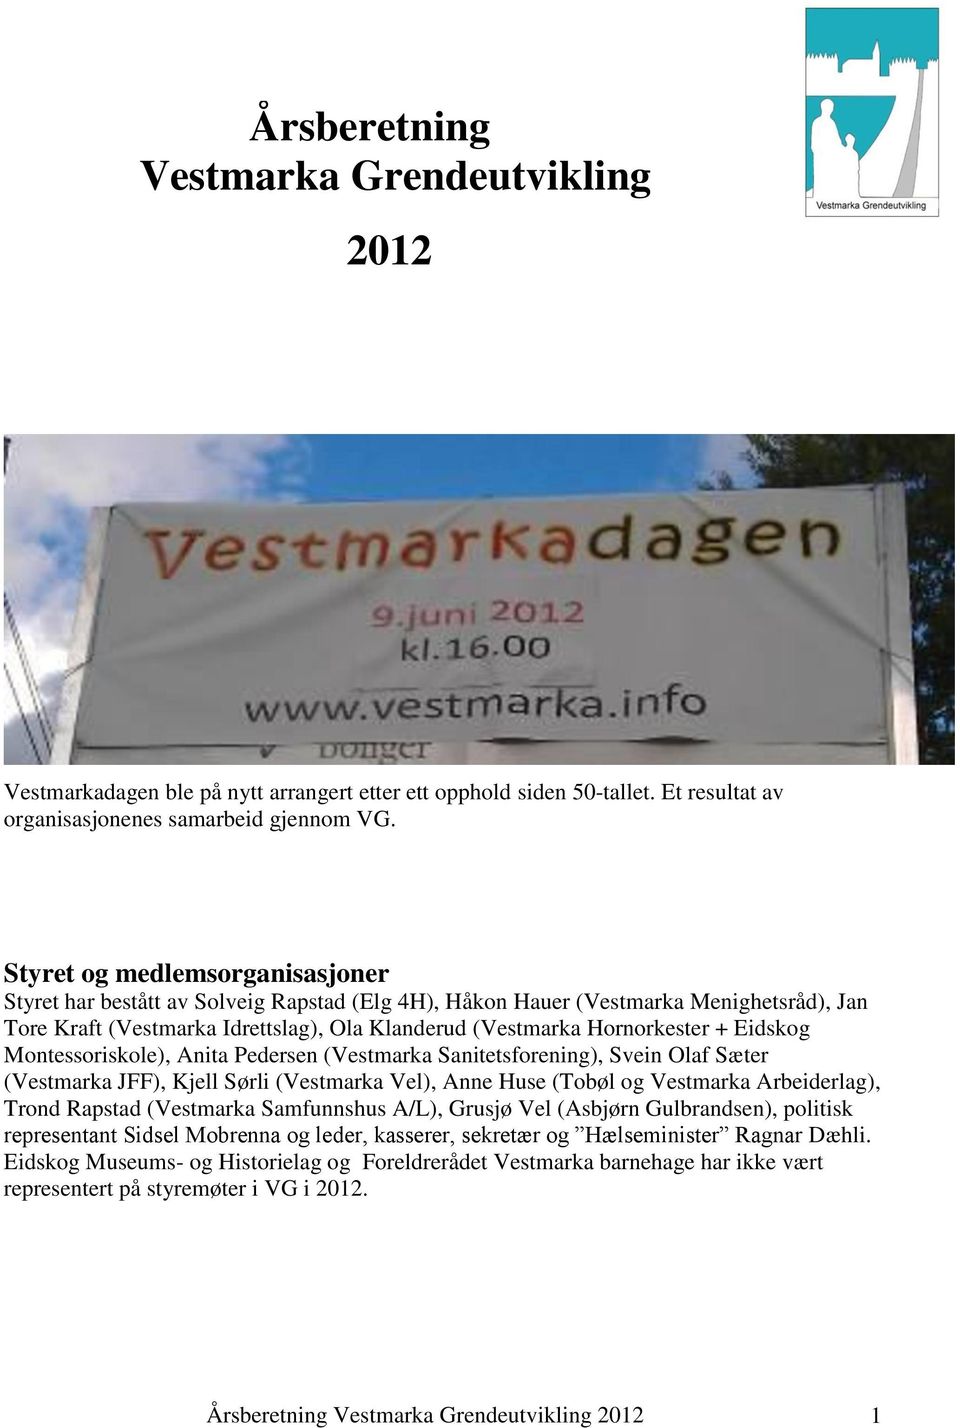 Eidskog Montessoriskole), Anita Pedersen (Vestmarka Sanitetsforening), Svein Olaf Sæter (Vestmarka JFF), Kjell Sørli (Vestmarka Vel), Anne Huse (Tobøl og Vestmarka Arbeiderlag), Trond Rapstad